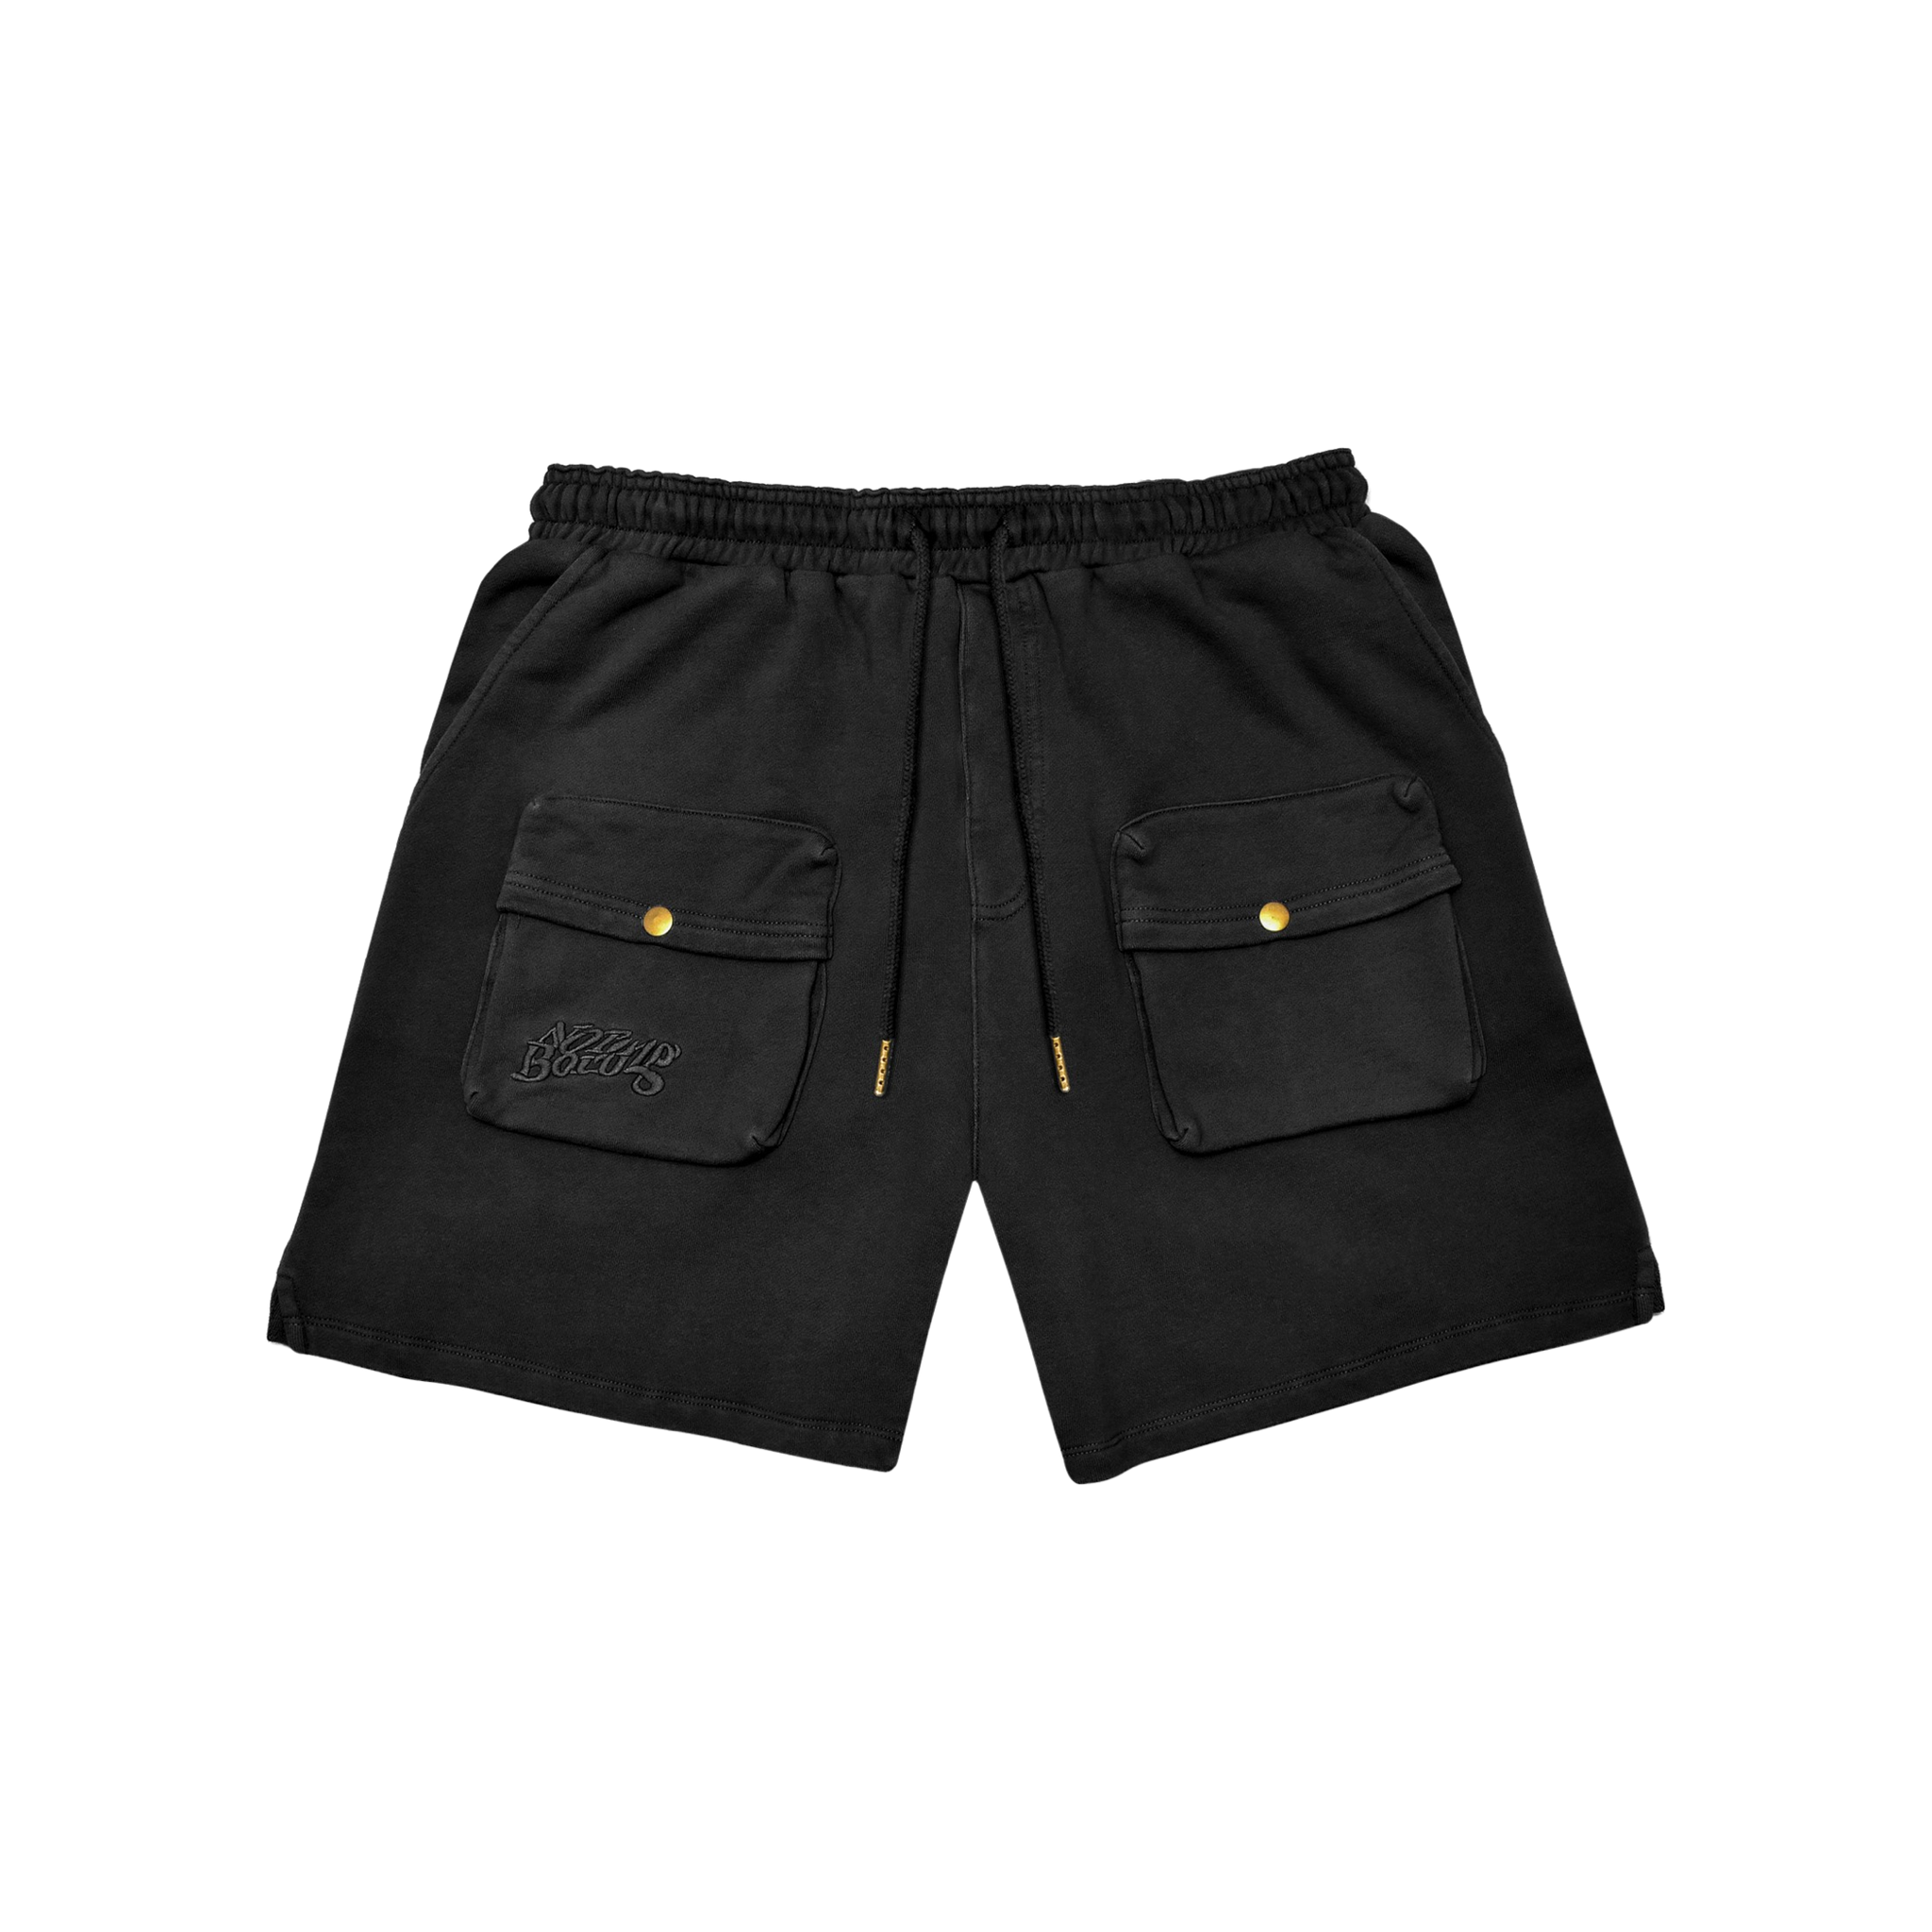 Cargo Shorts in Black